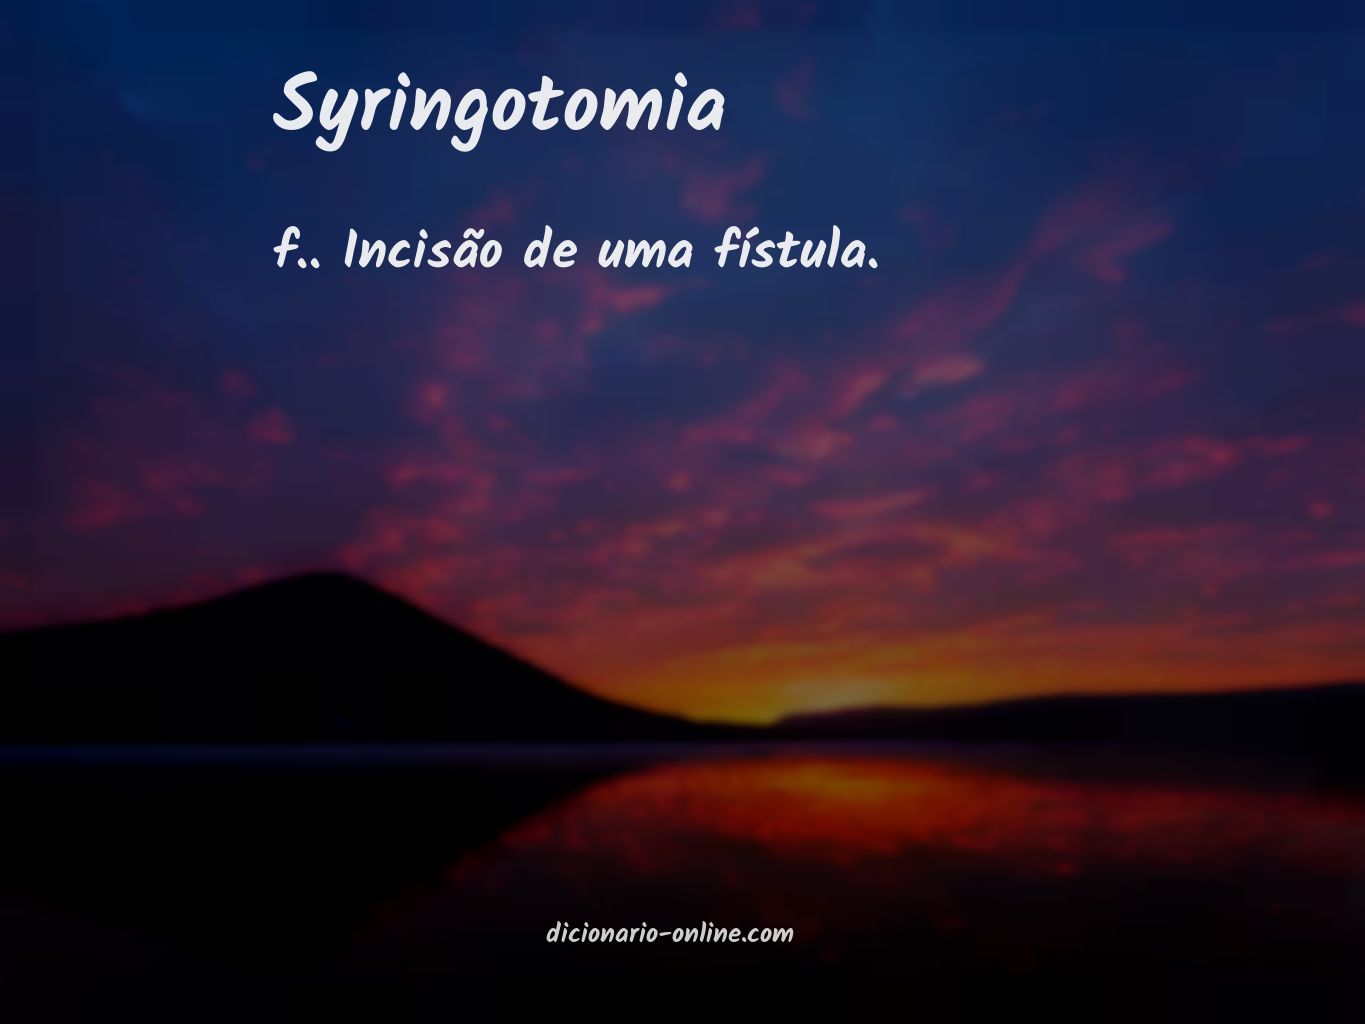 Significado de syringotomia